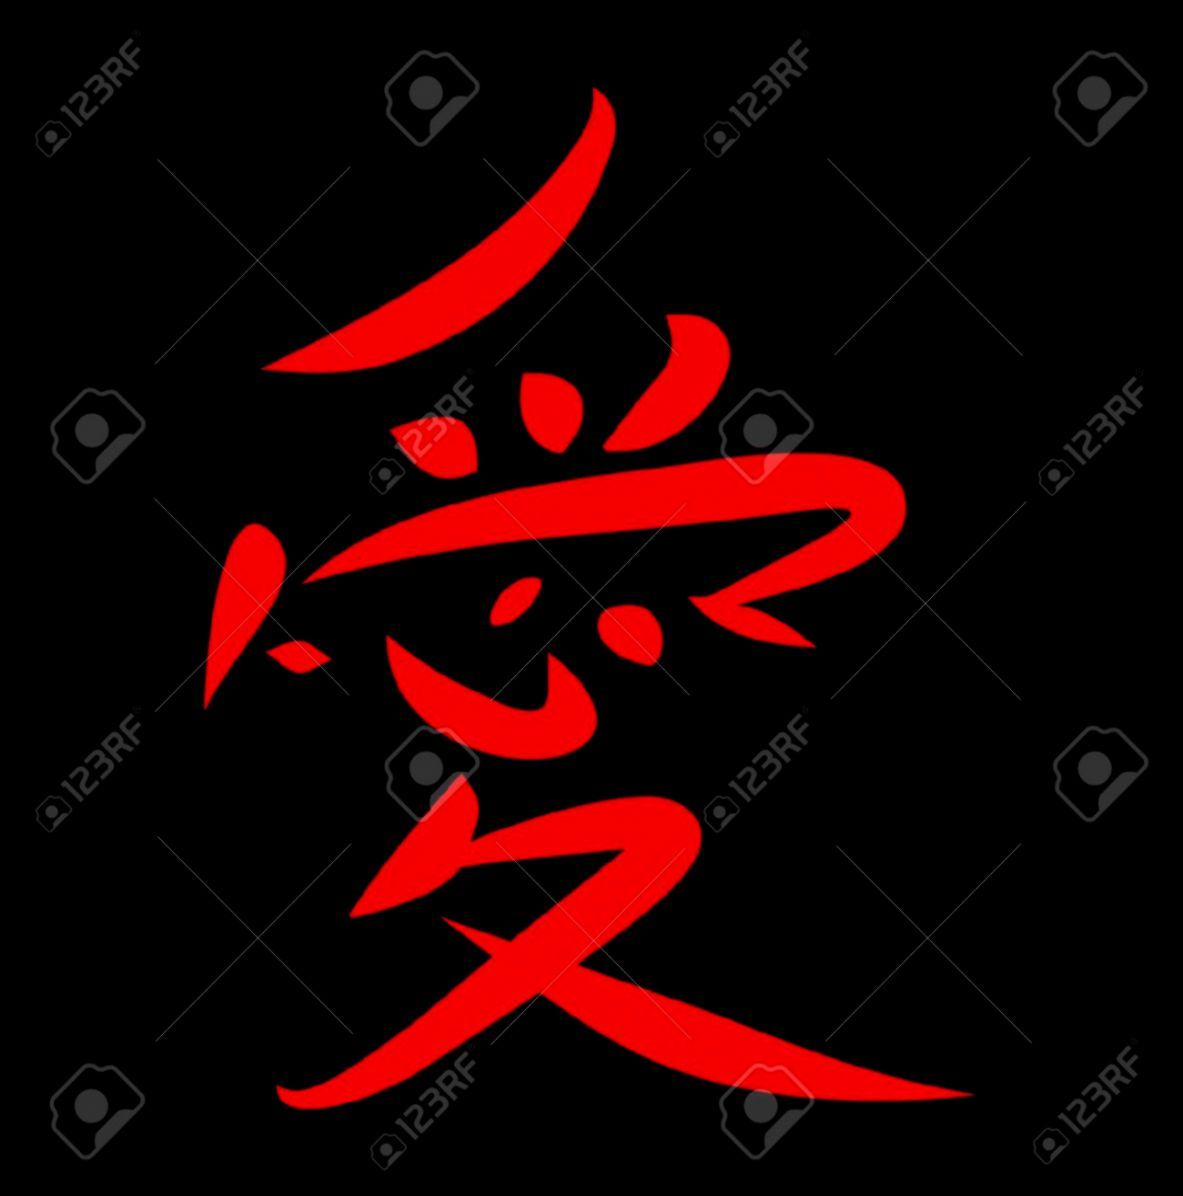 Chinese Symbol Wallpaper Free Chinese Symbol Background